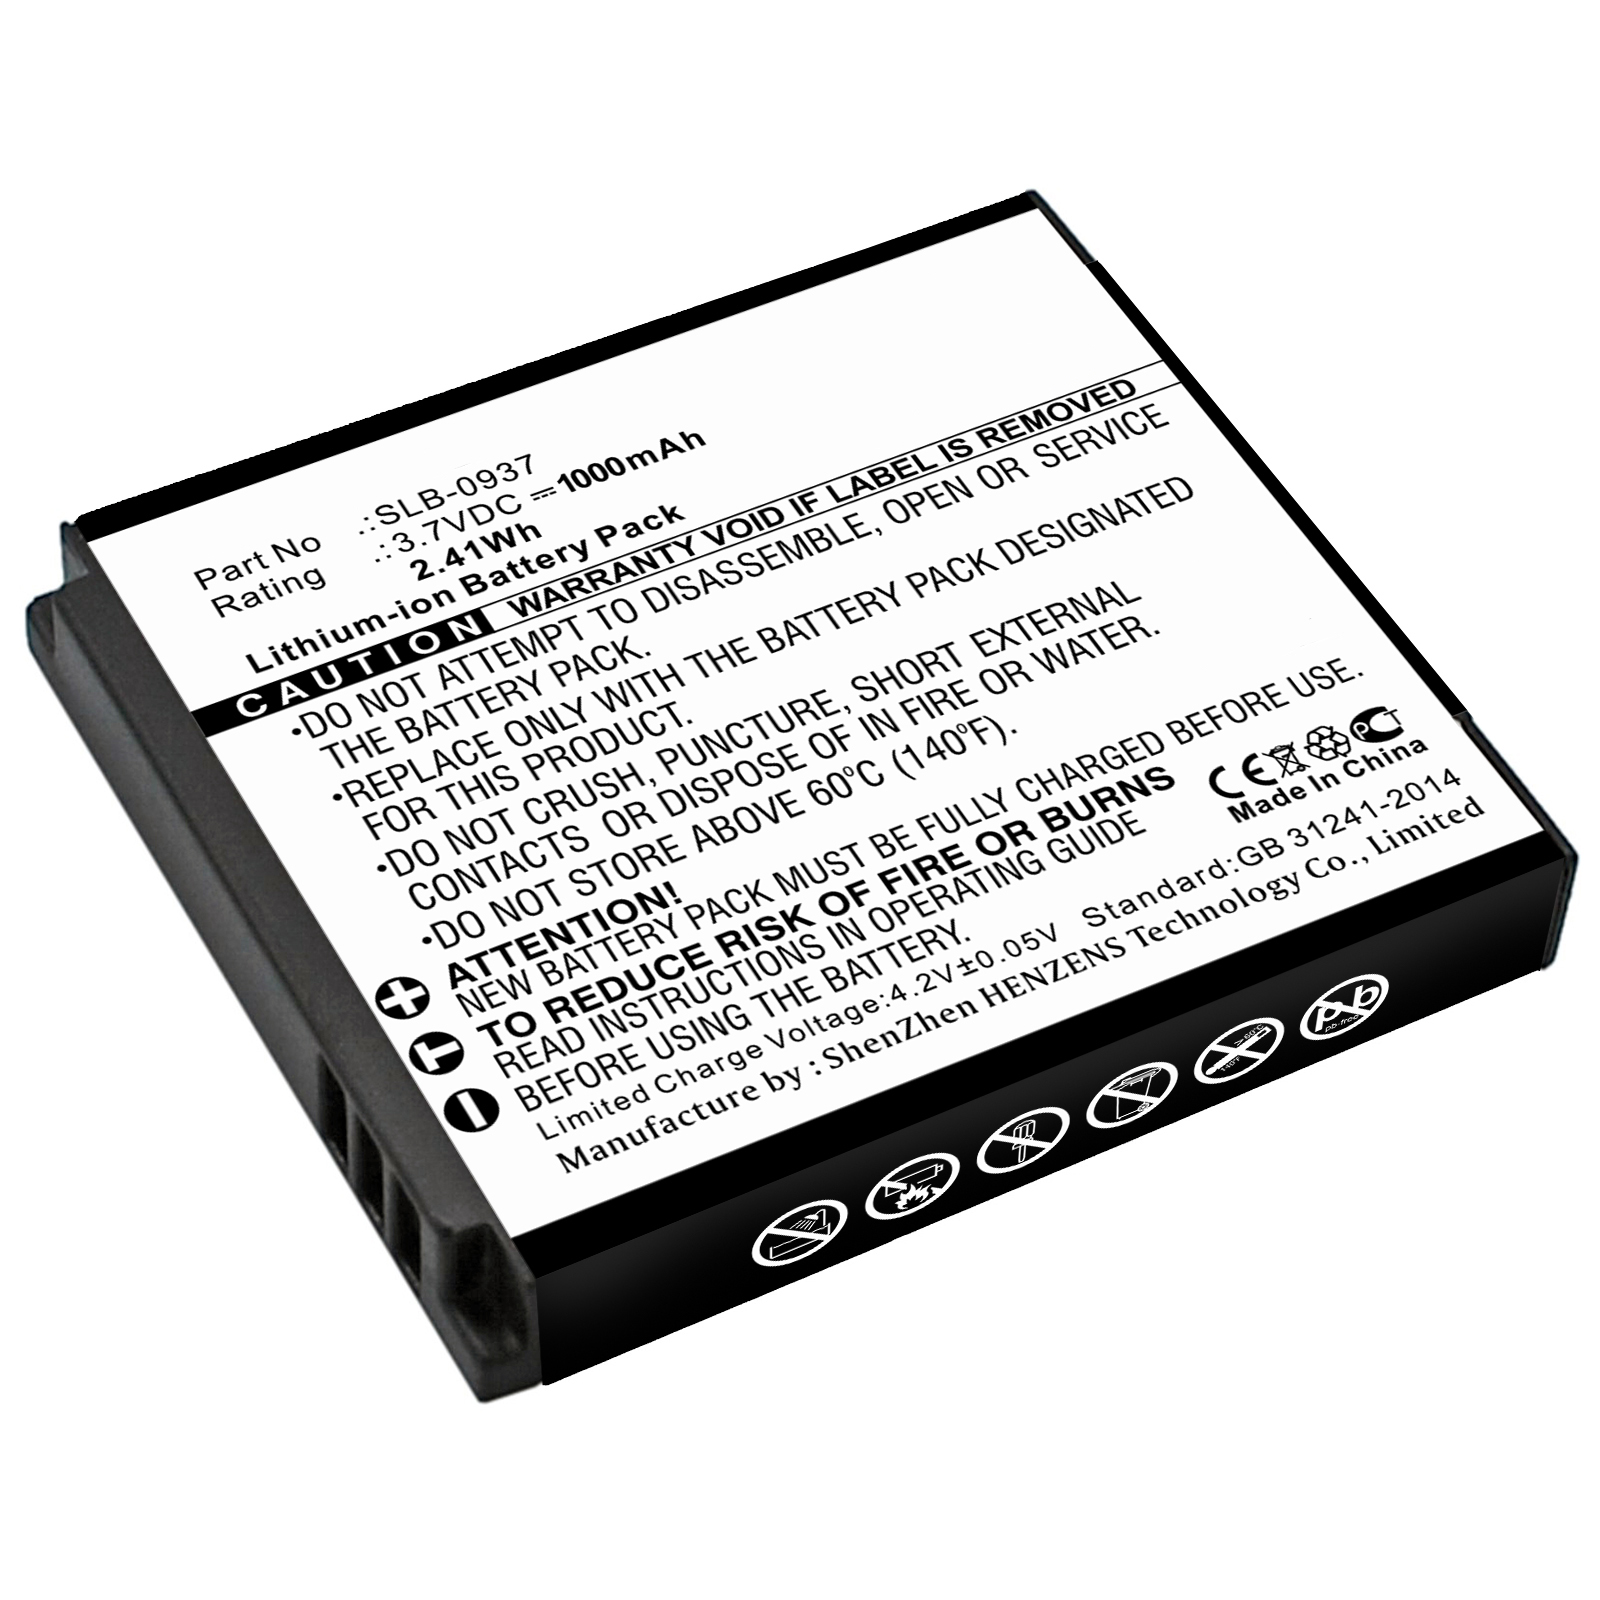 Synergy Digital Camera Battery, Compatible with Samsung CL5, i8, L730, L830, NV33, NV4, PL10 Camera Battery (3.7, Li-ion, 1000mAh)